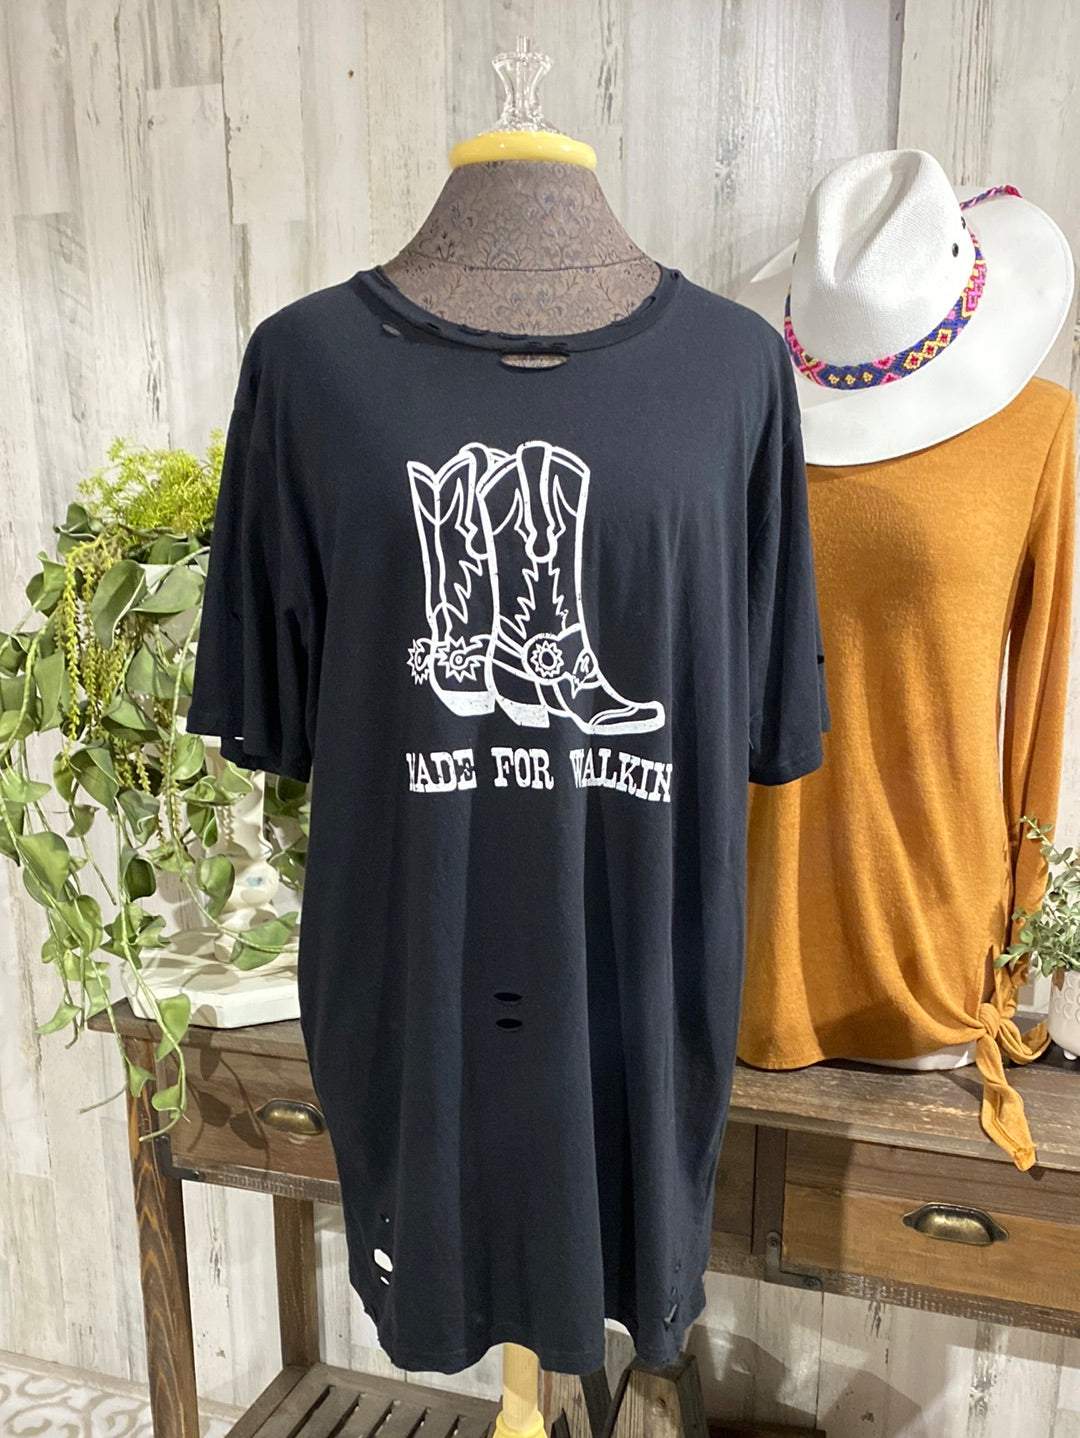 Womens Boots Made For Walking Tshirt XL NWT